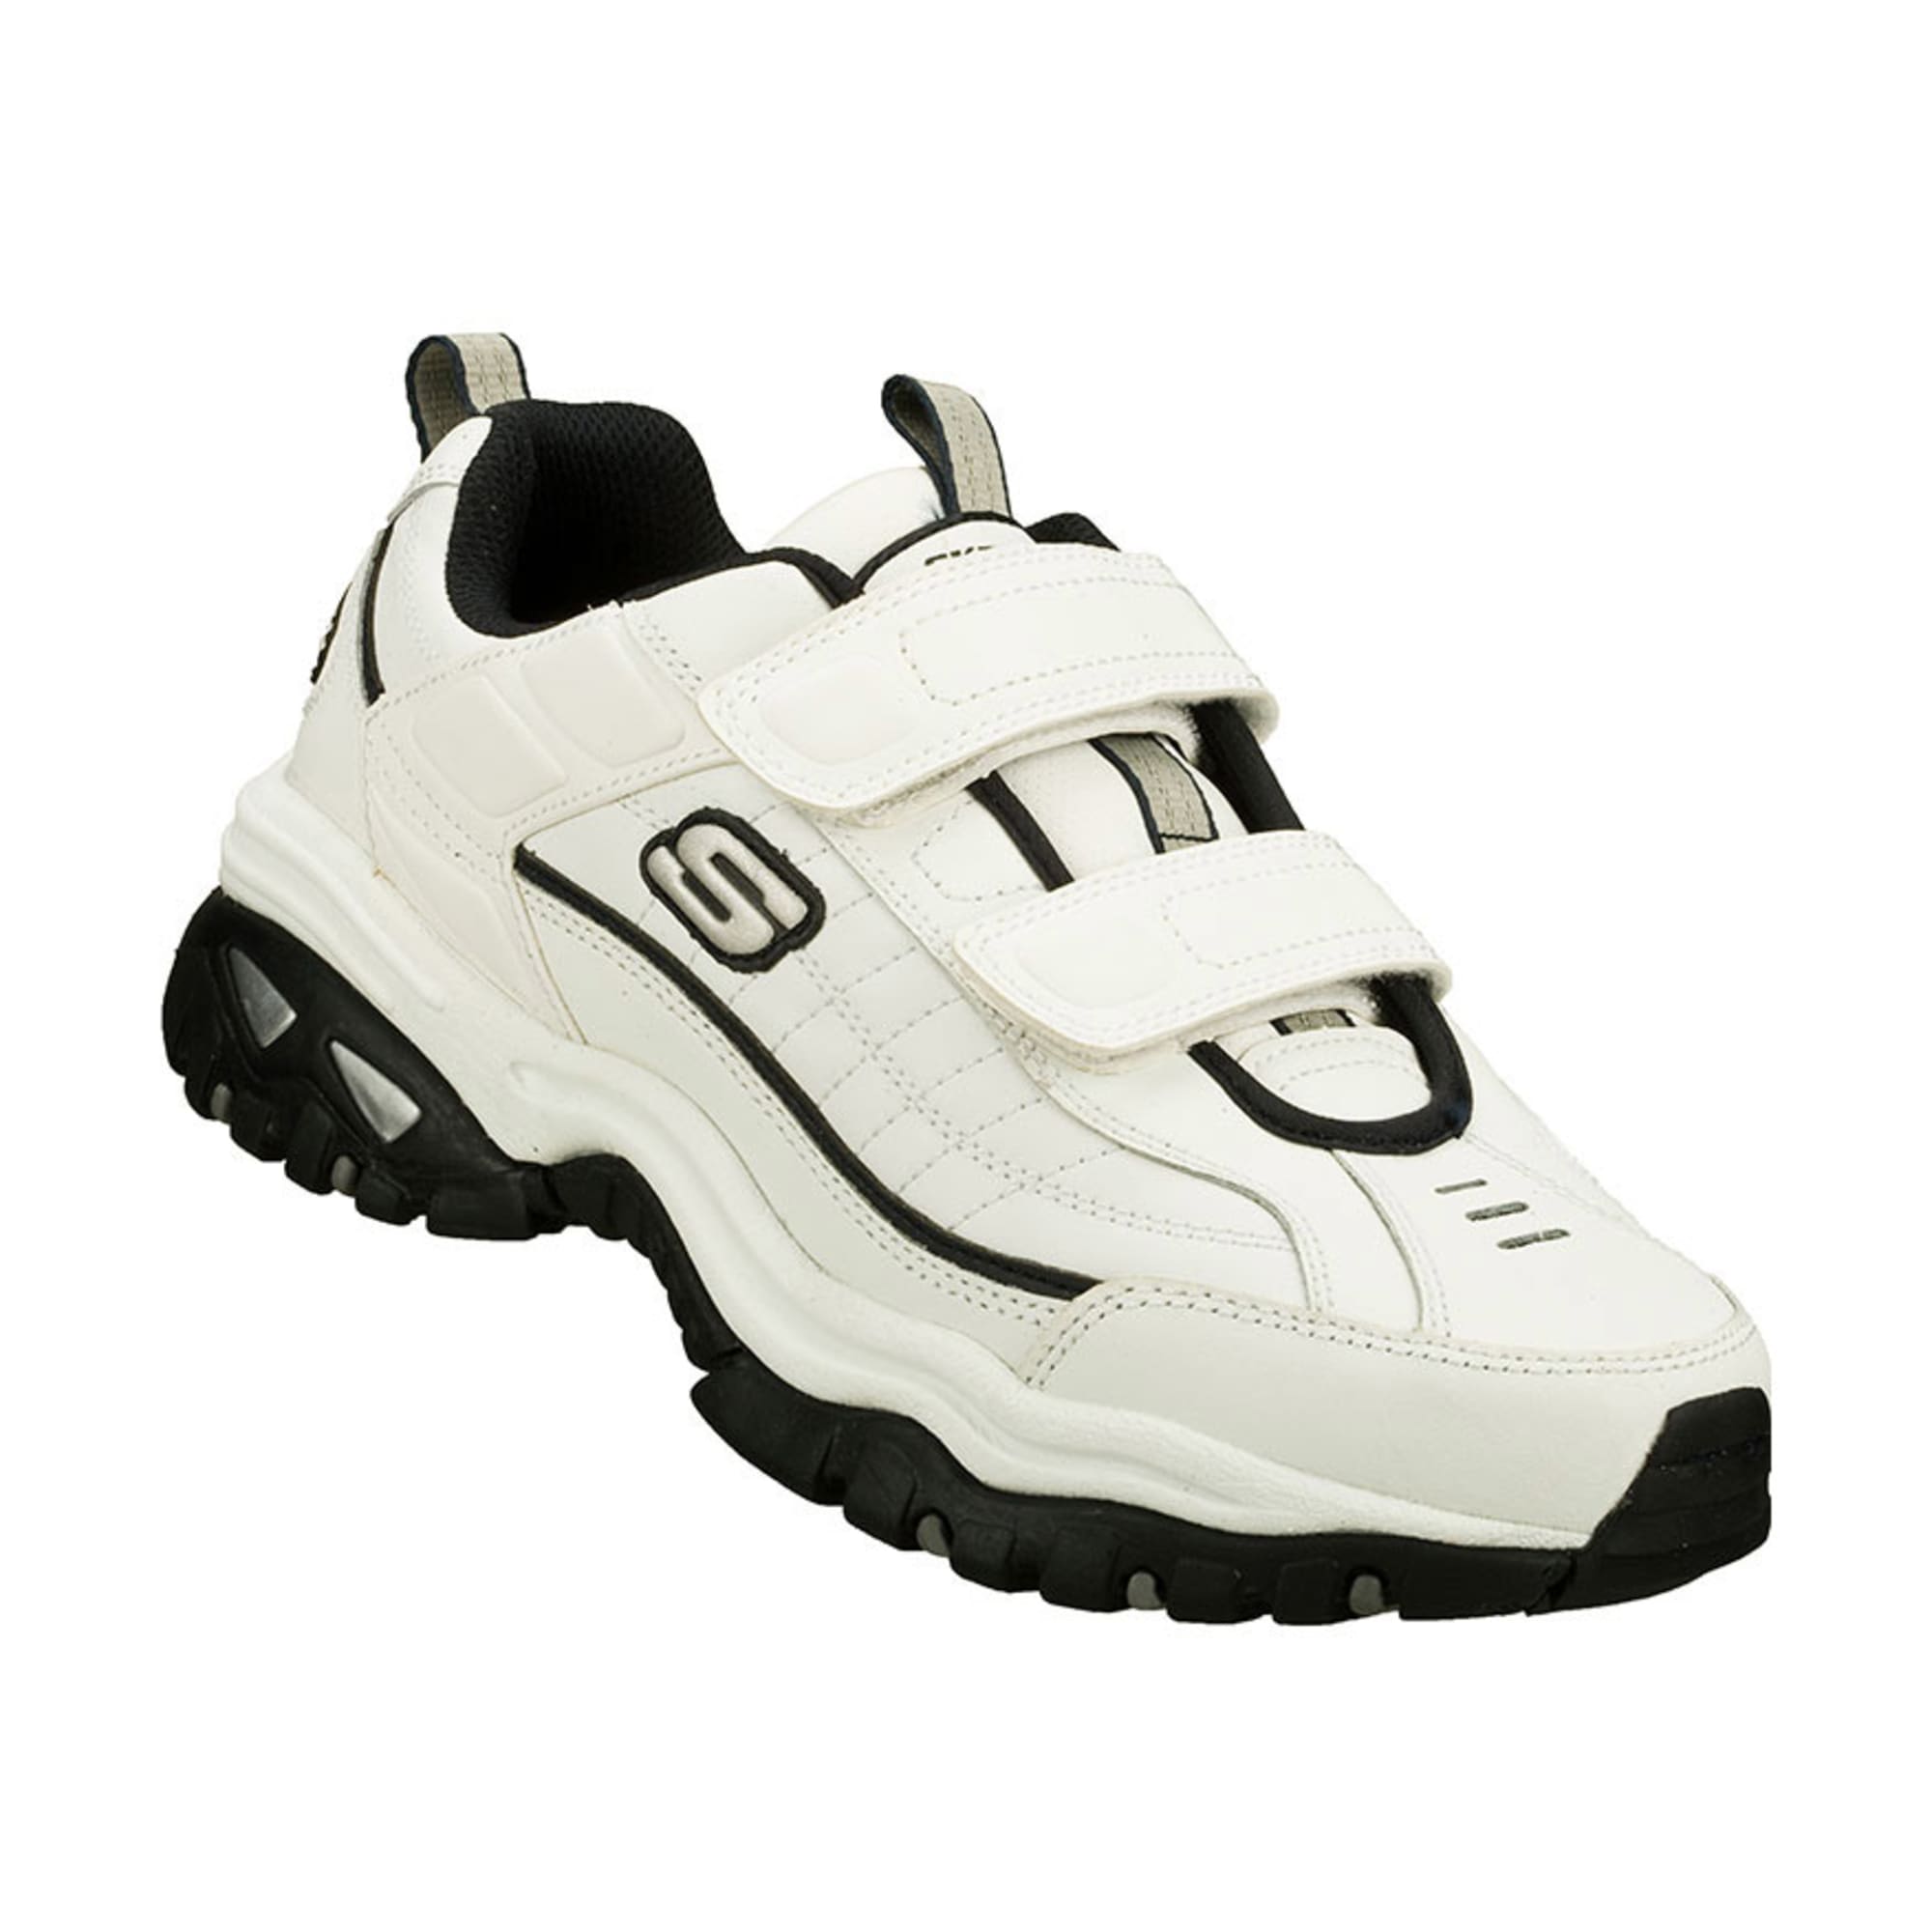 Men's Energy Walking Shoes, White, Wide - Bob's Stores